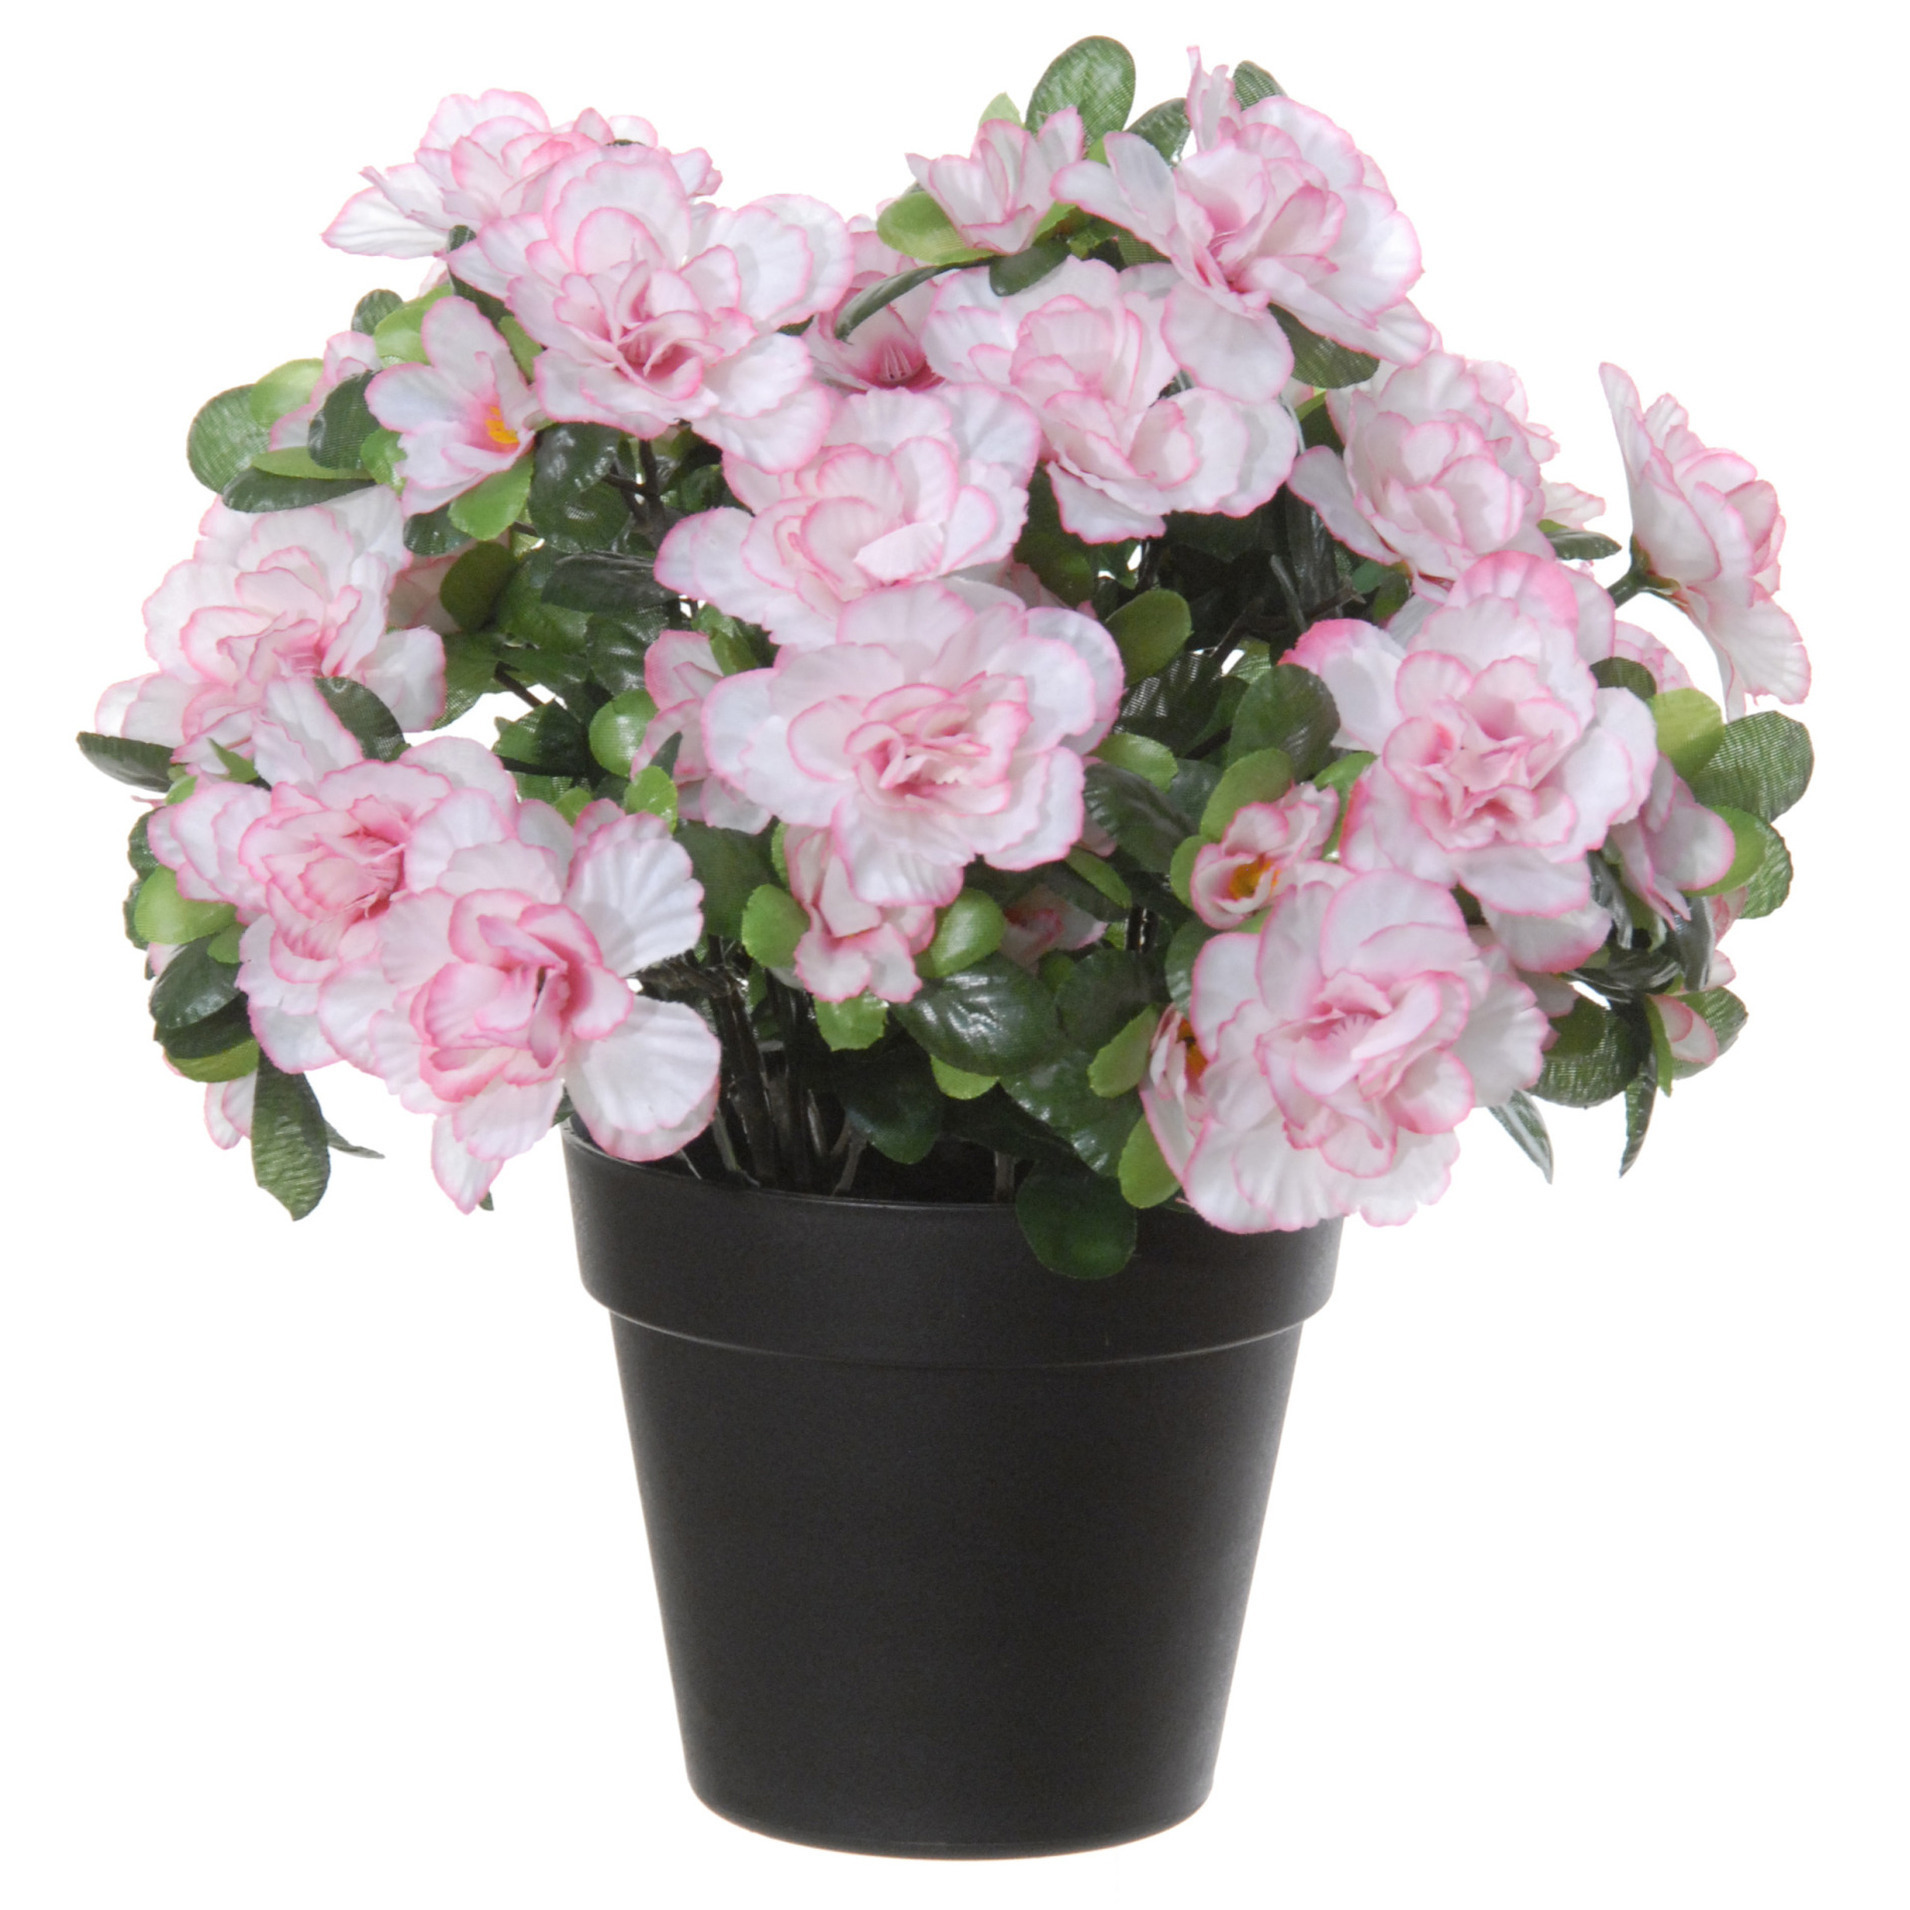 Azalea Kunstbloemen in pot wit-roze H28 cm